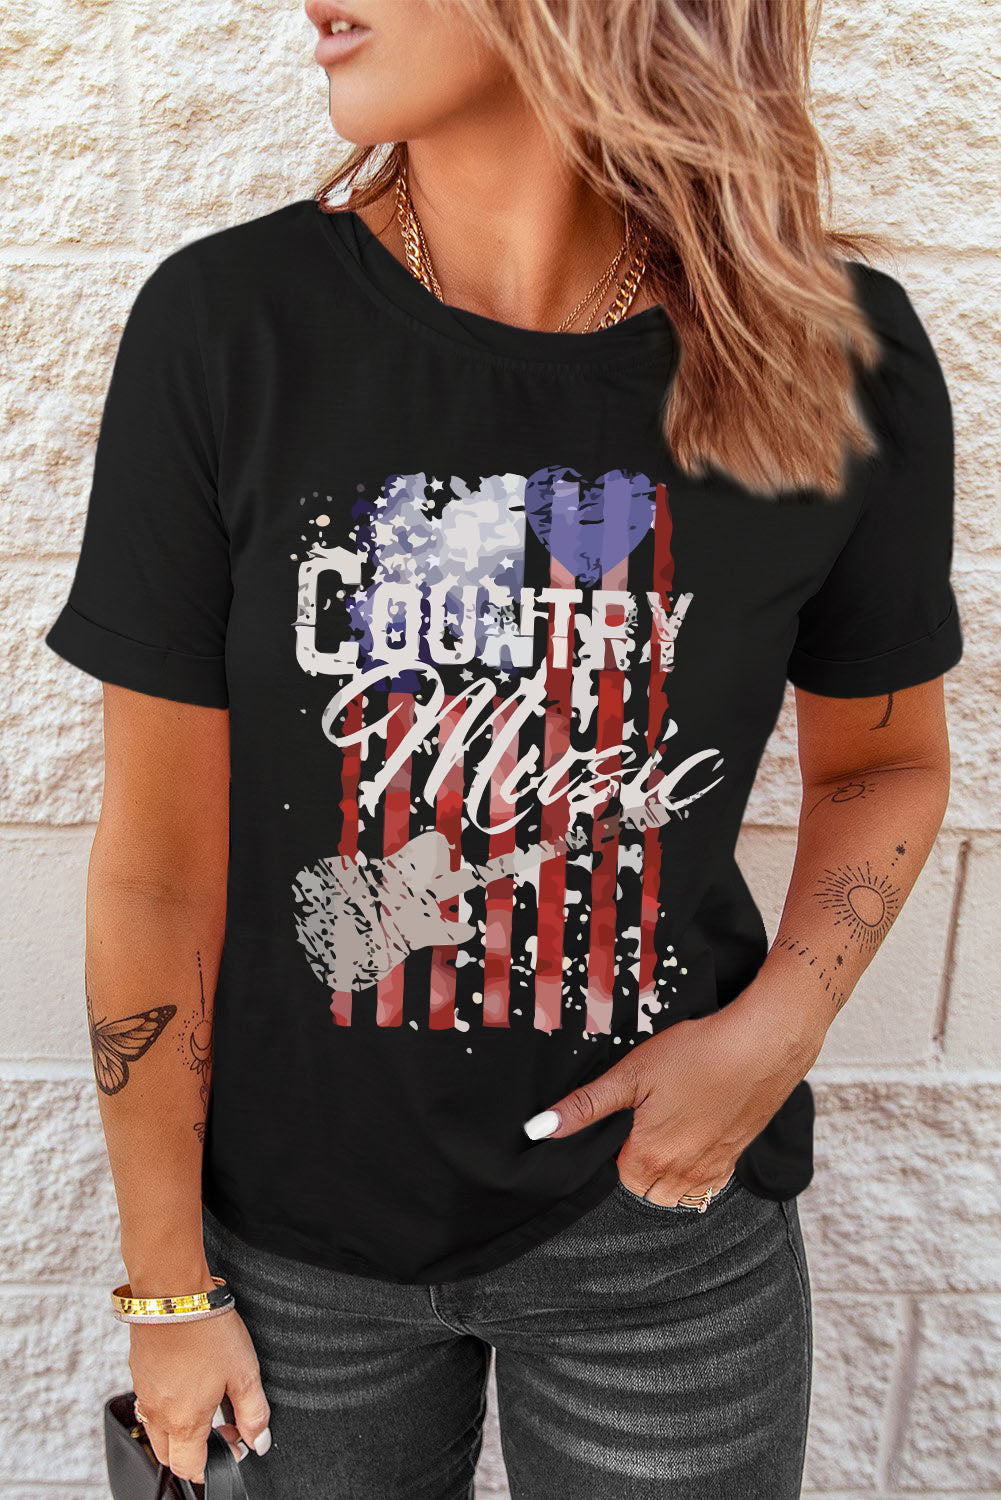 USA COUNTRY MUSIC Graphic Tee Shirt